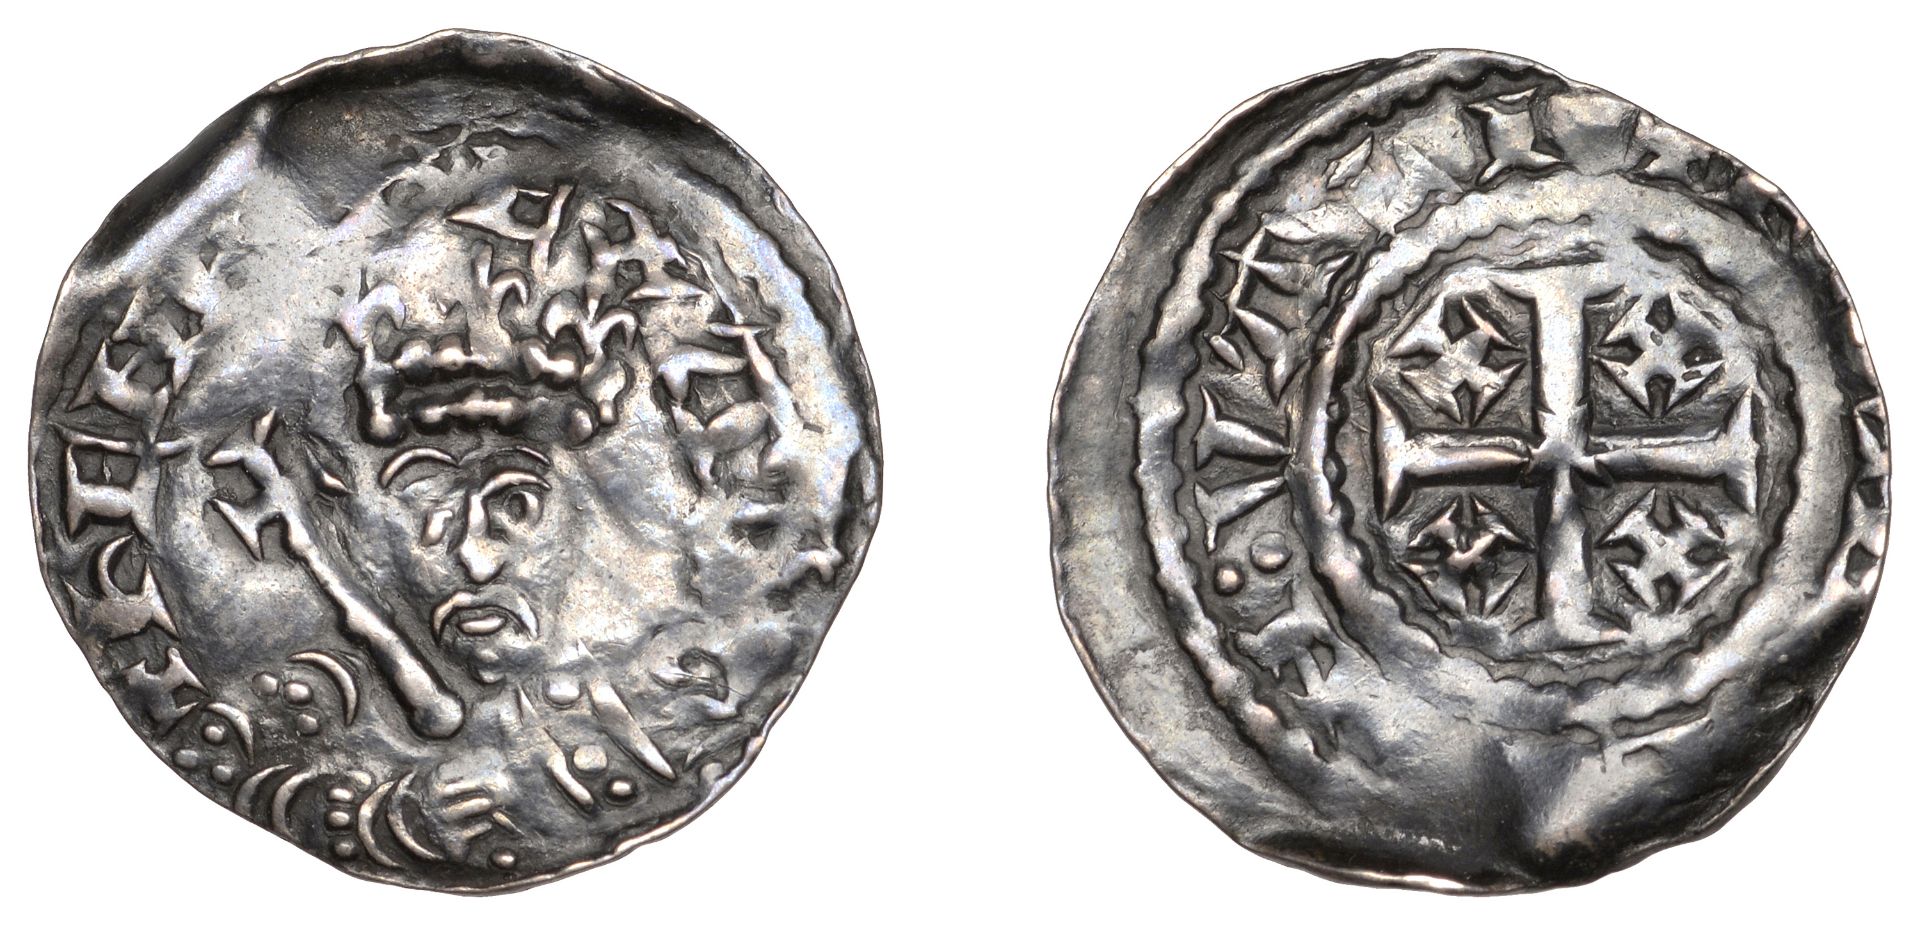 Henry II (1154-1189), Tealby coinage, Penny, type A2, Wallingford, Fulke, fvlcke [â€“]n: vali,...